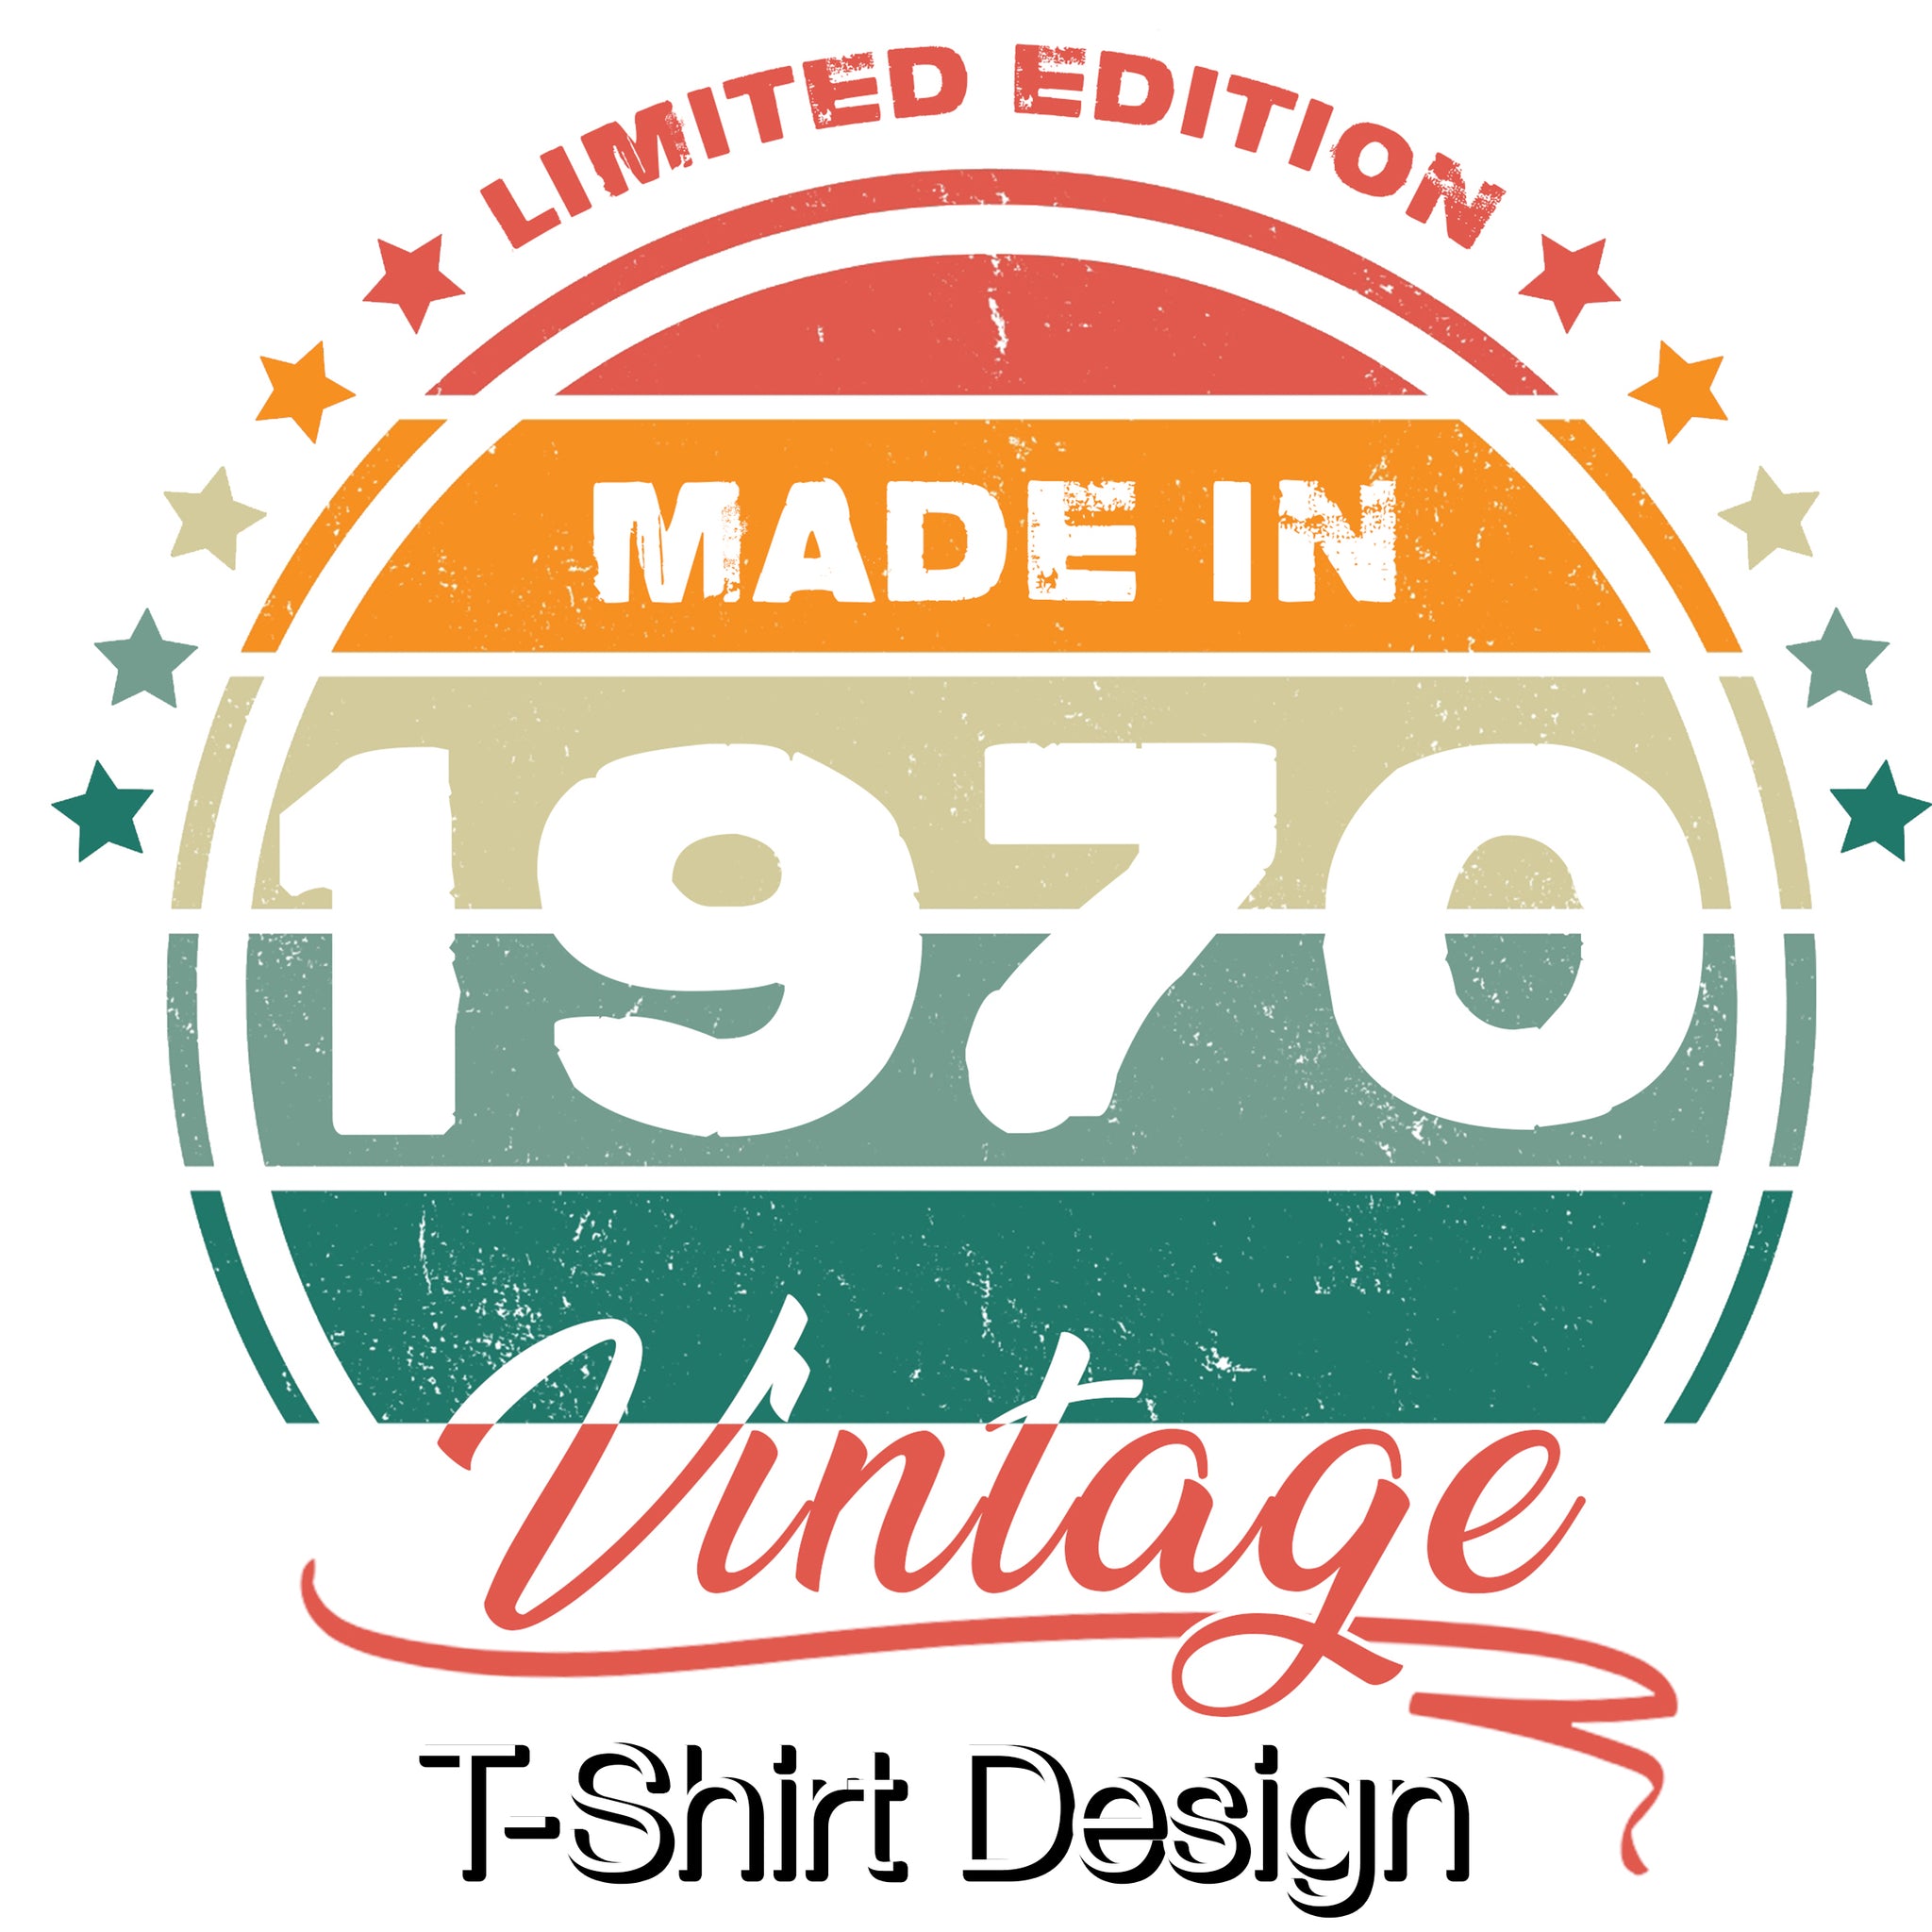 'Made in 1970s' Retro Design